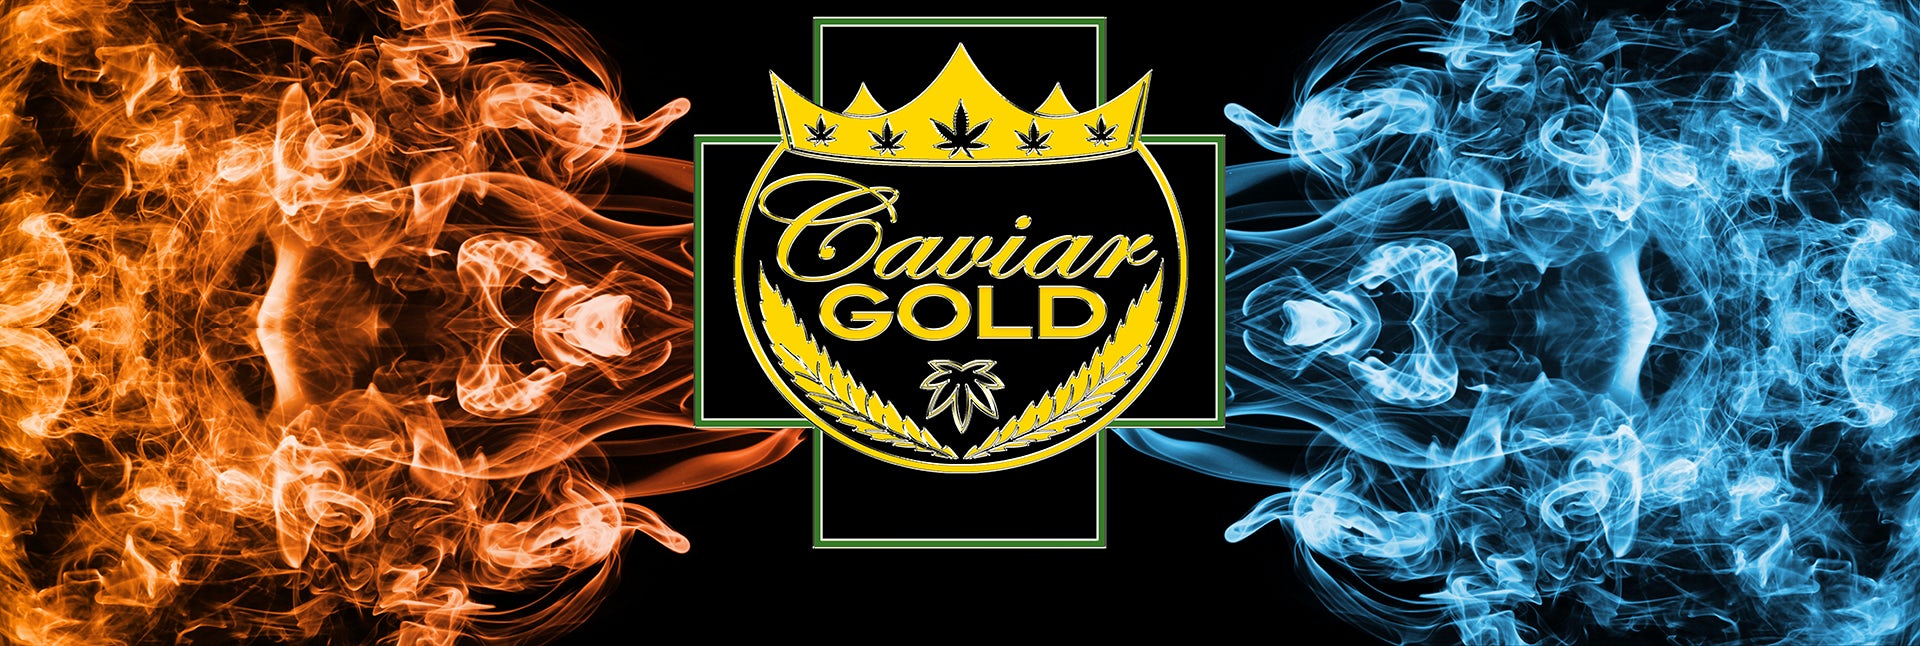 Caviar Gold banner